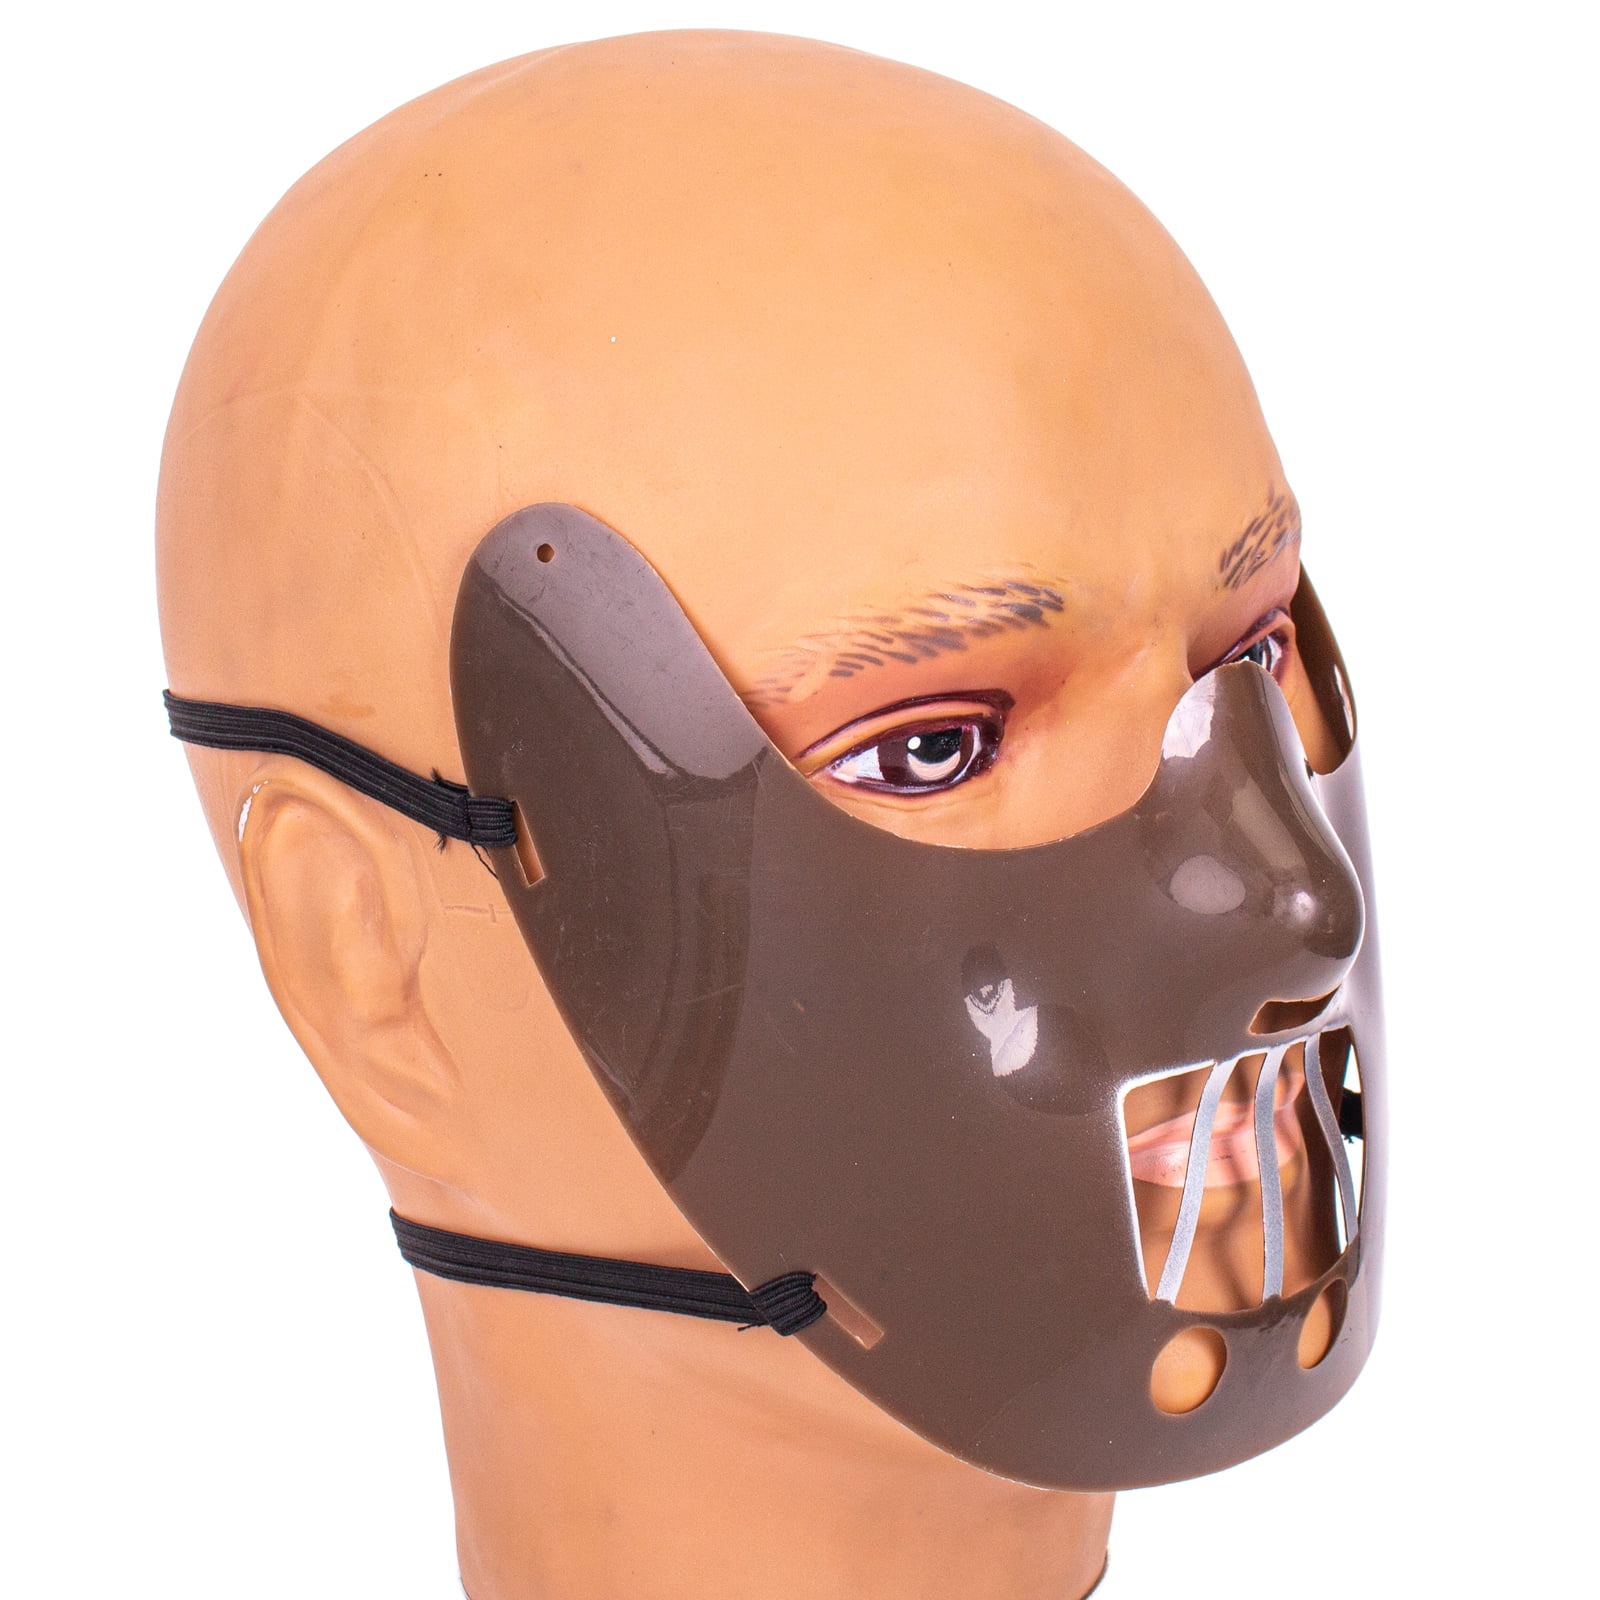 Regent Man Hannibal Lecter Bite Restraint Costume Mask, Brown, One-Size -